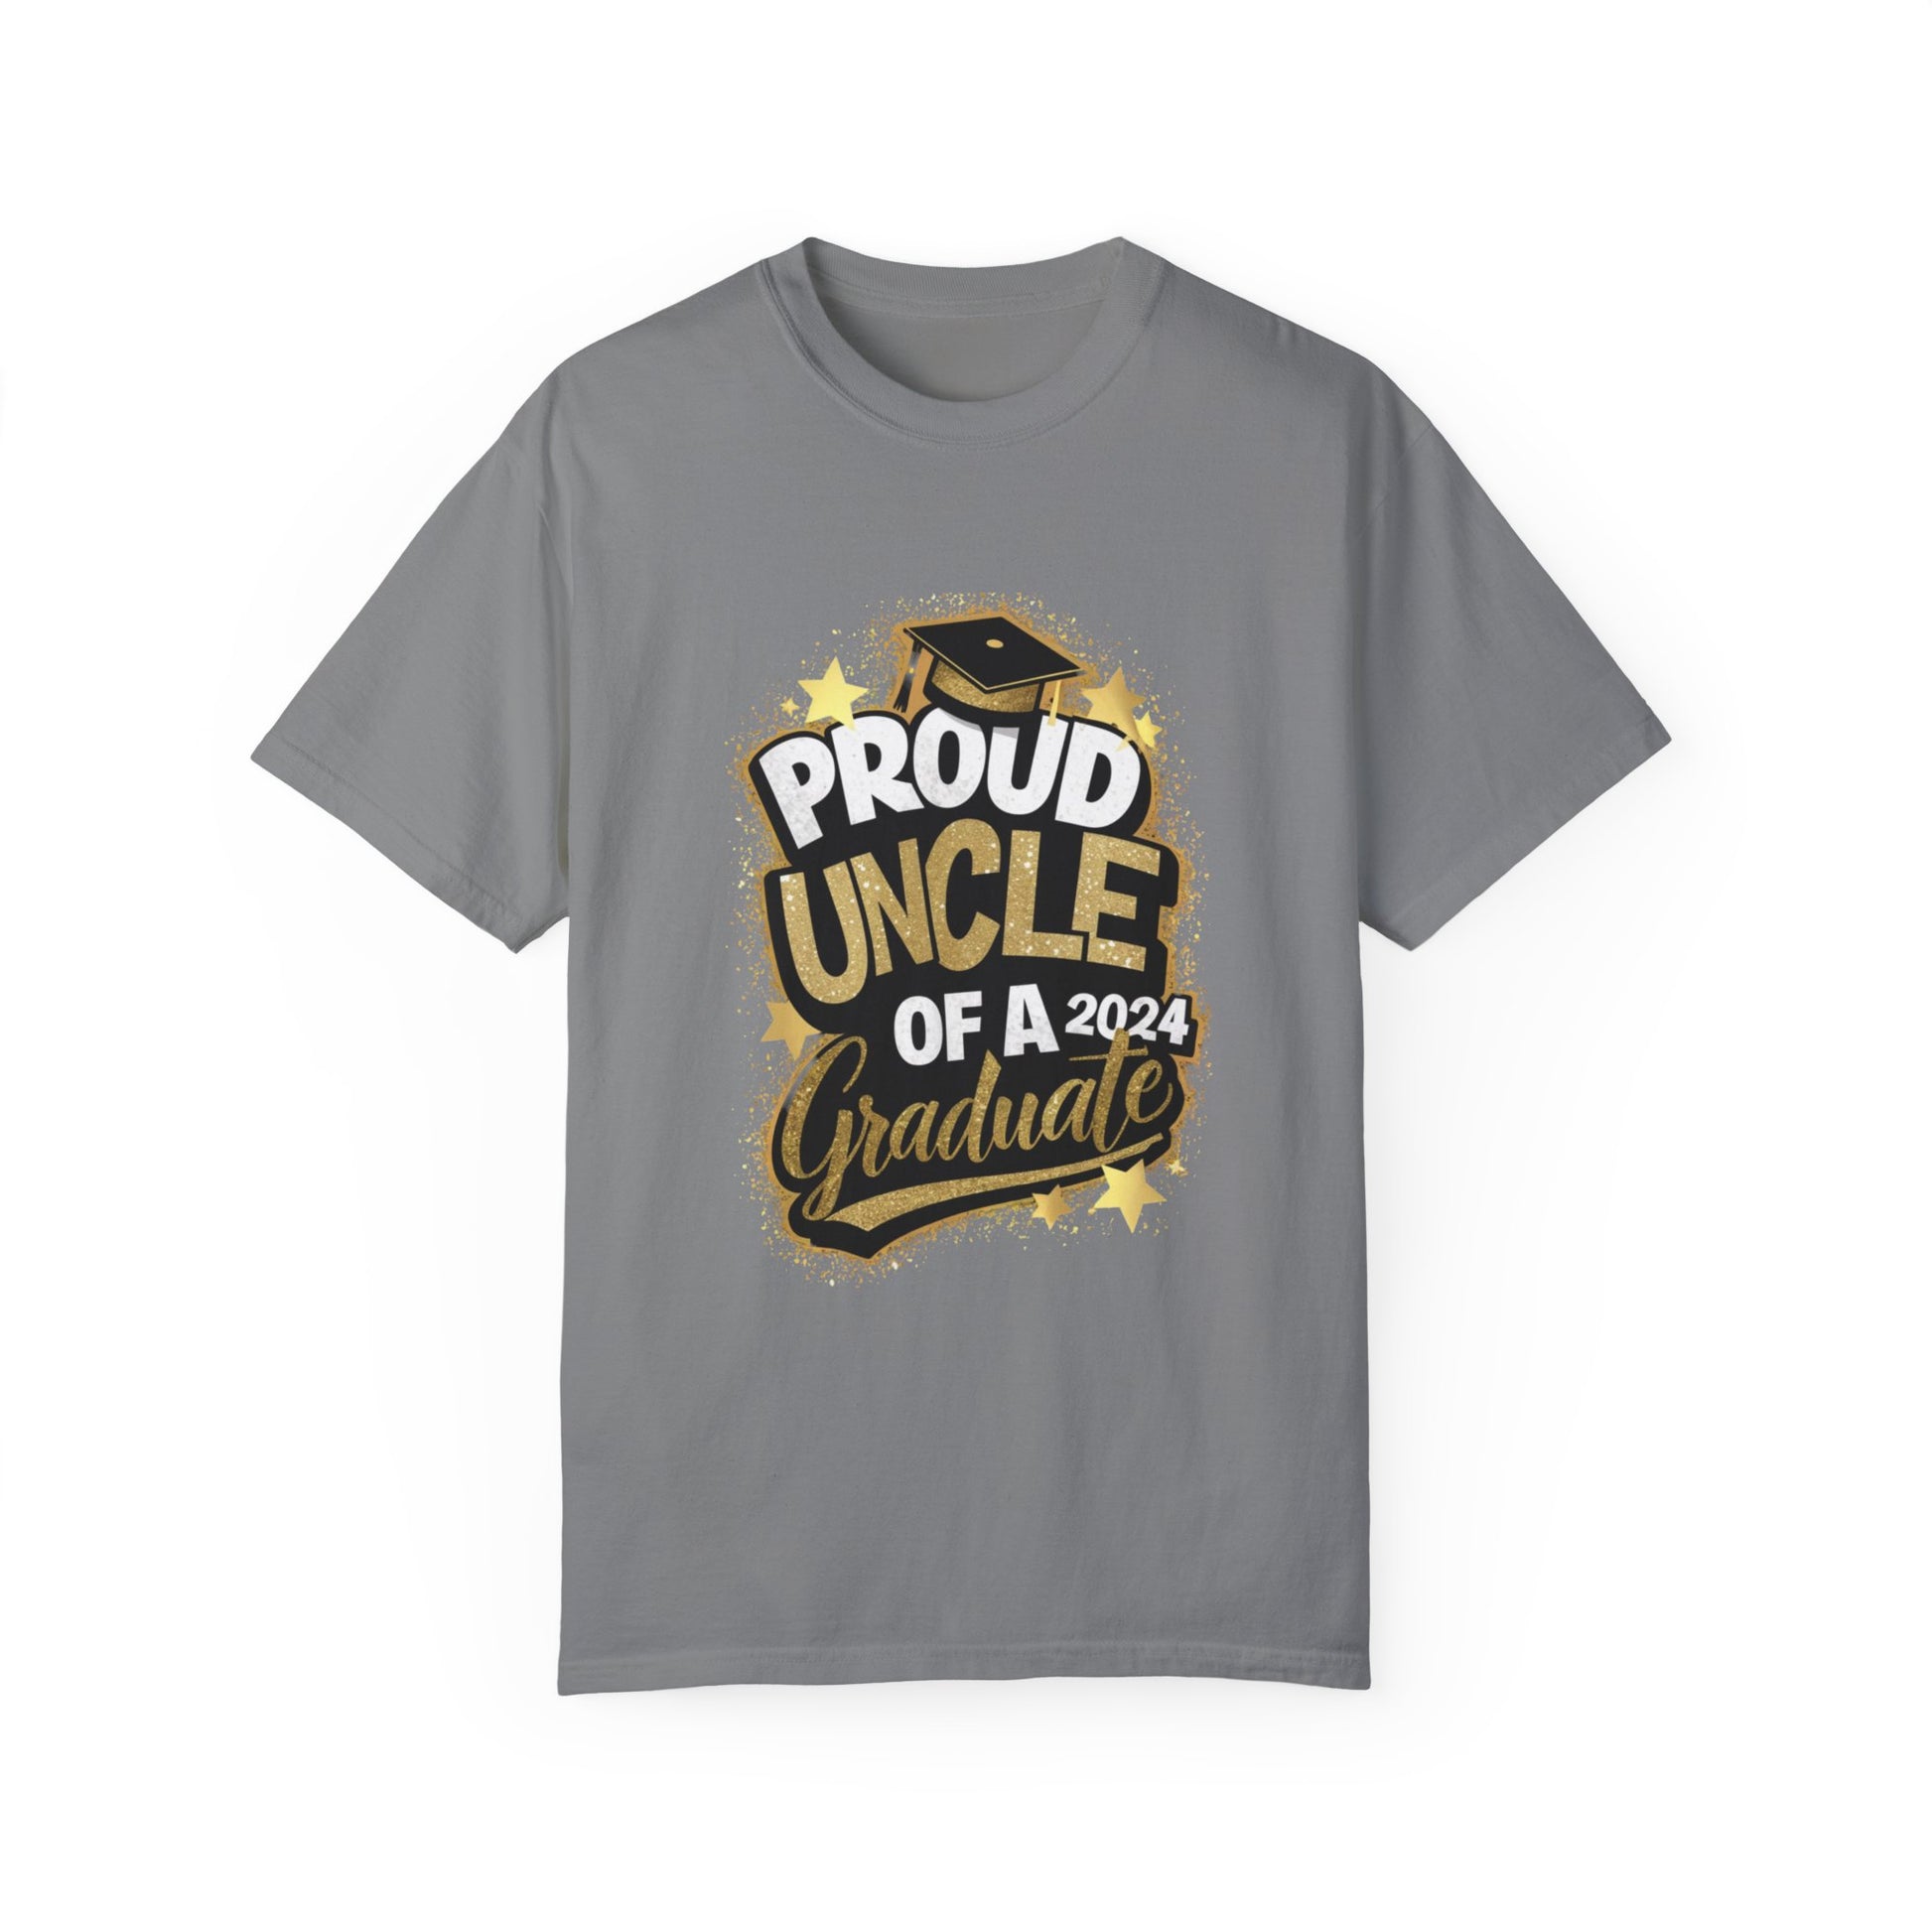 Proud Uncle of a 2024 Graduate Unisex Garment-dyed T-shirt Cotton Funny Humorous Graphic Soft Premium Unisex Men Women Grey T-shirt Birthday Gift-9